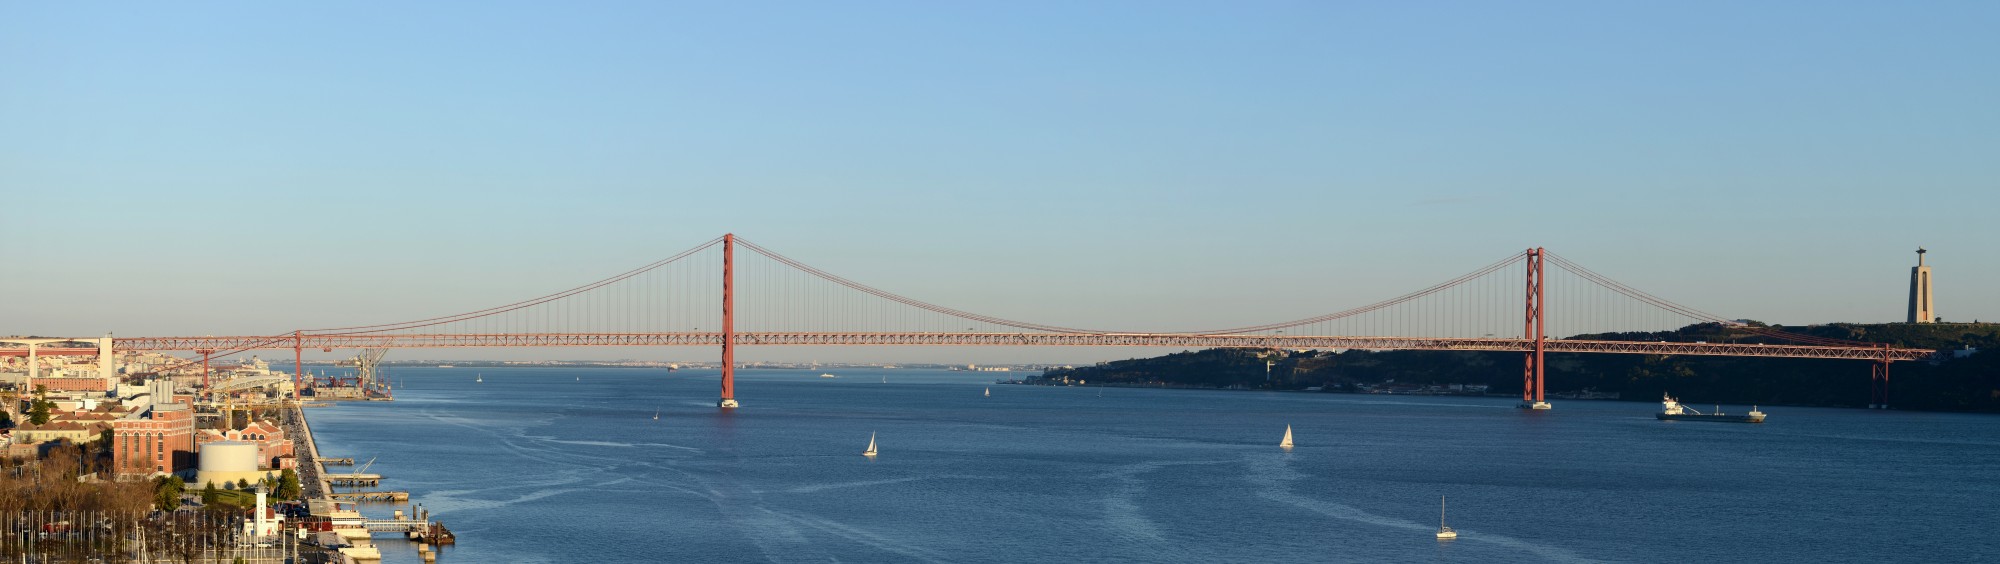 Lisboa January 2015-42a